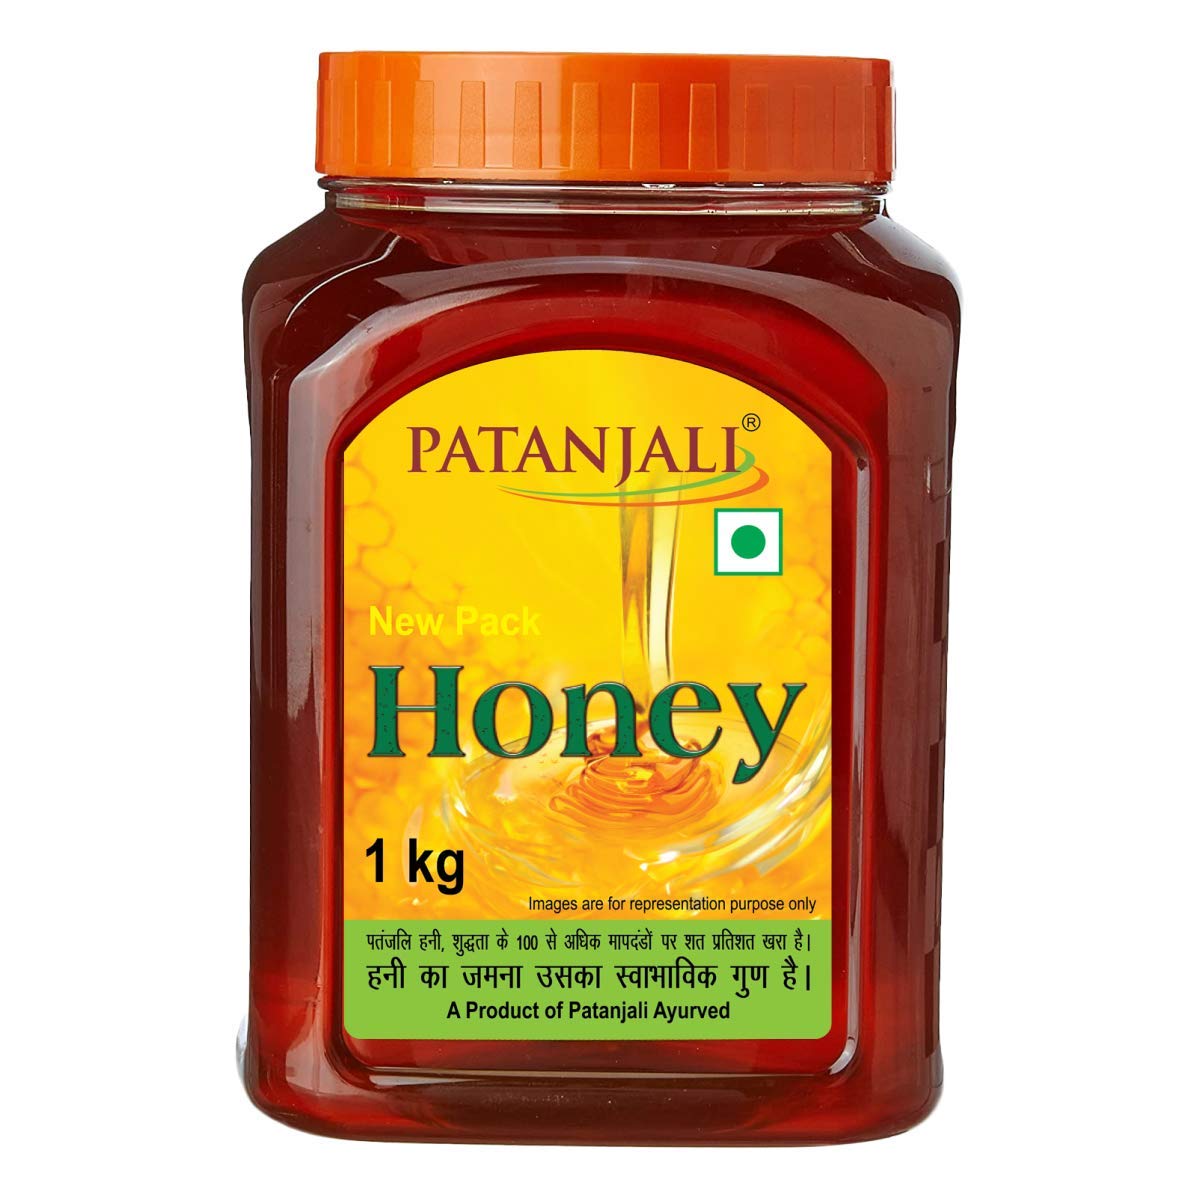 Honey for substitutes